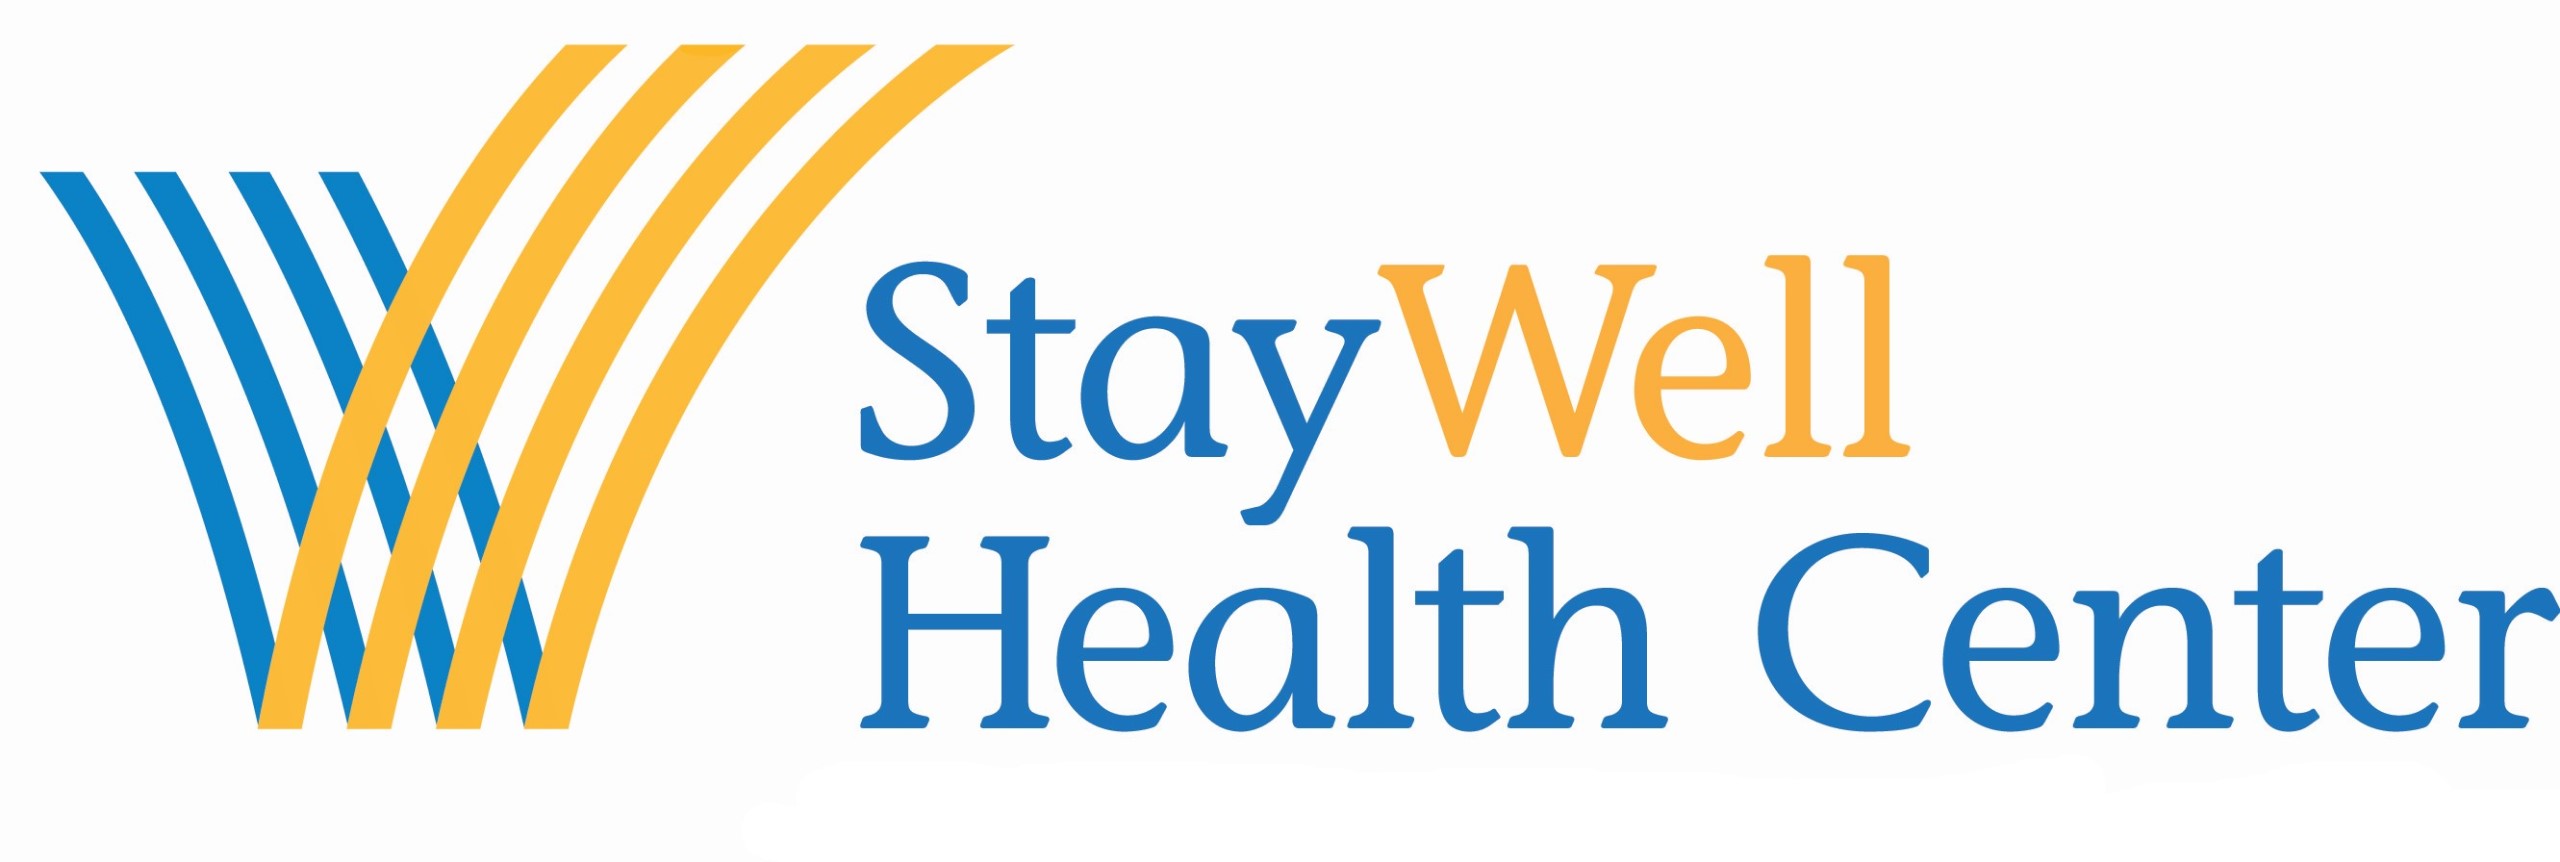 StayWel Health Center Logo